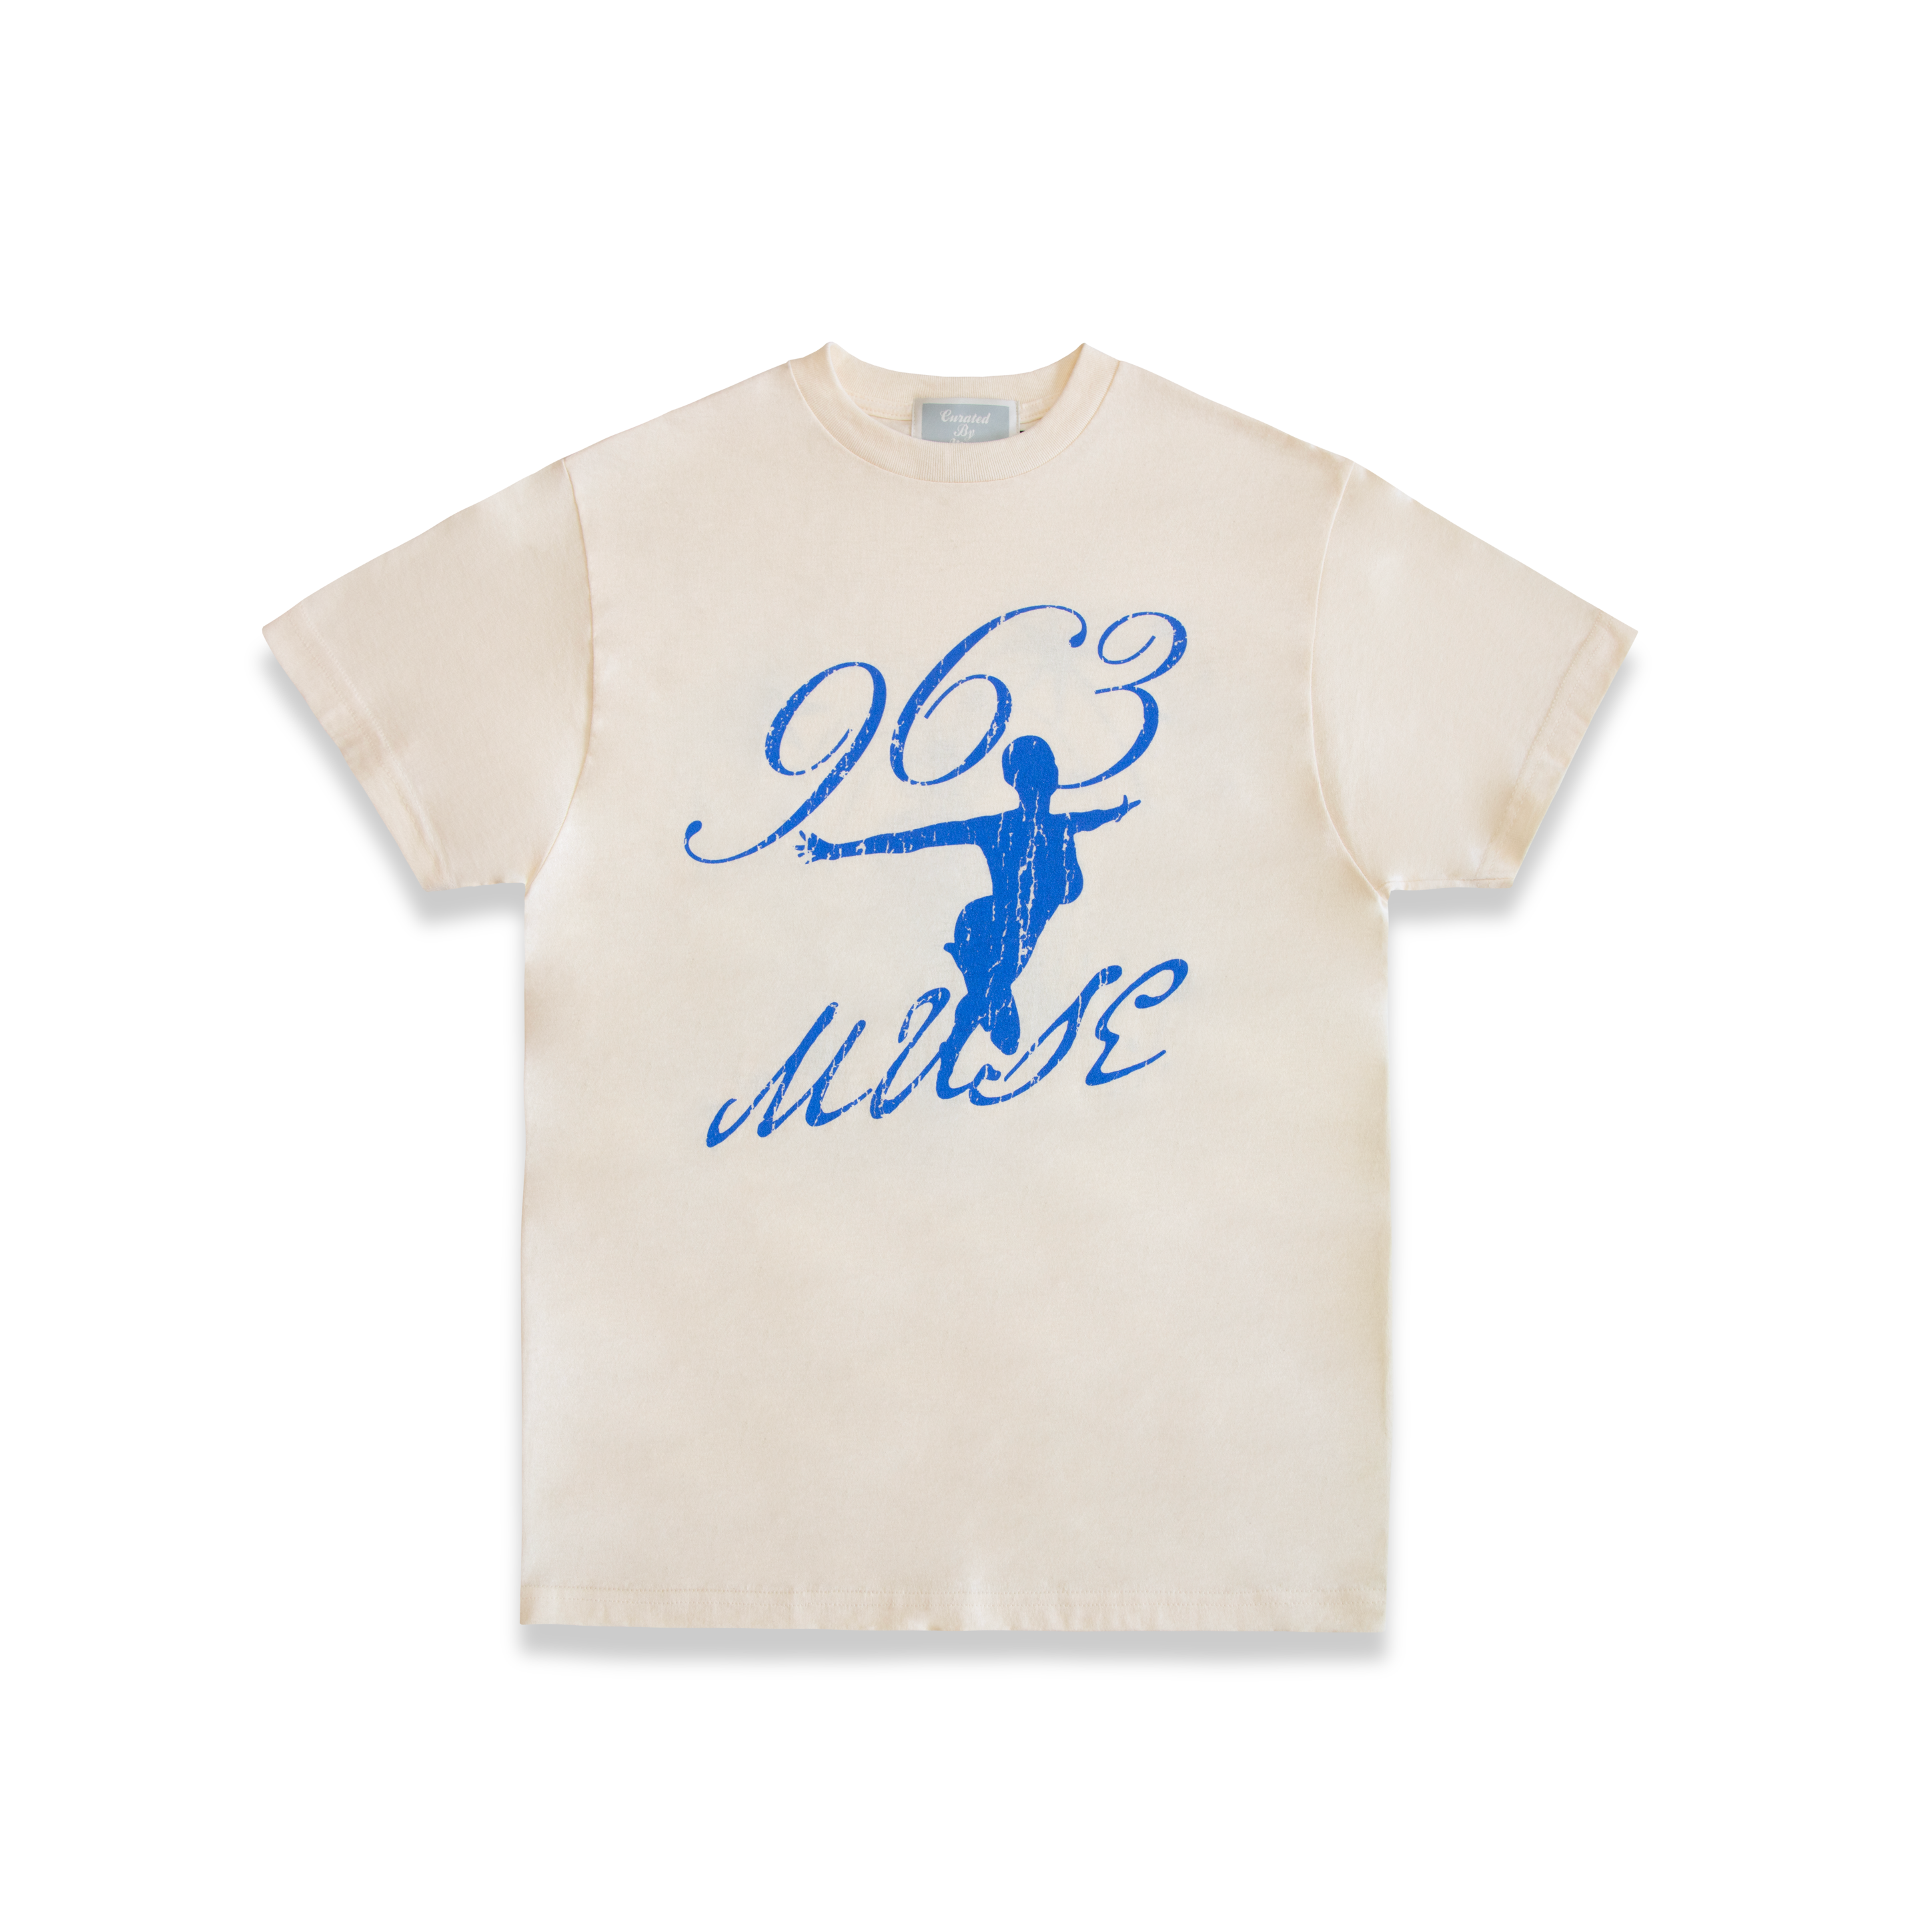 Limited Edition 963 T-shirt - Cream